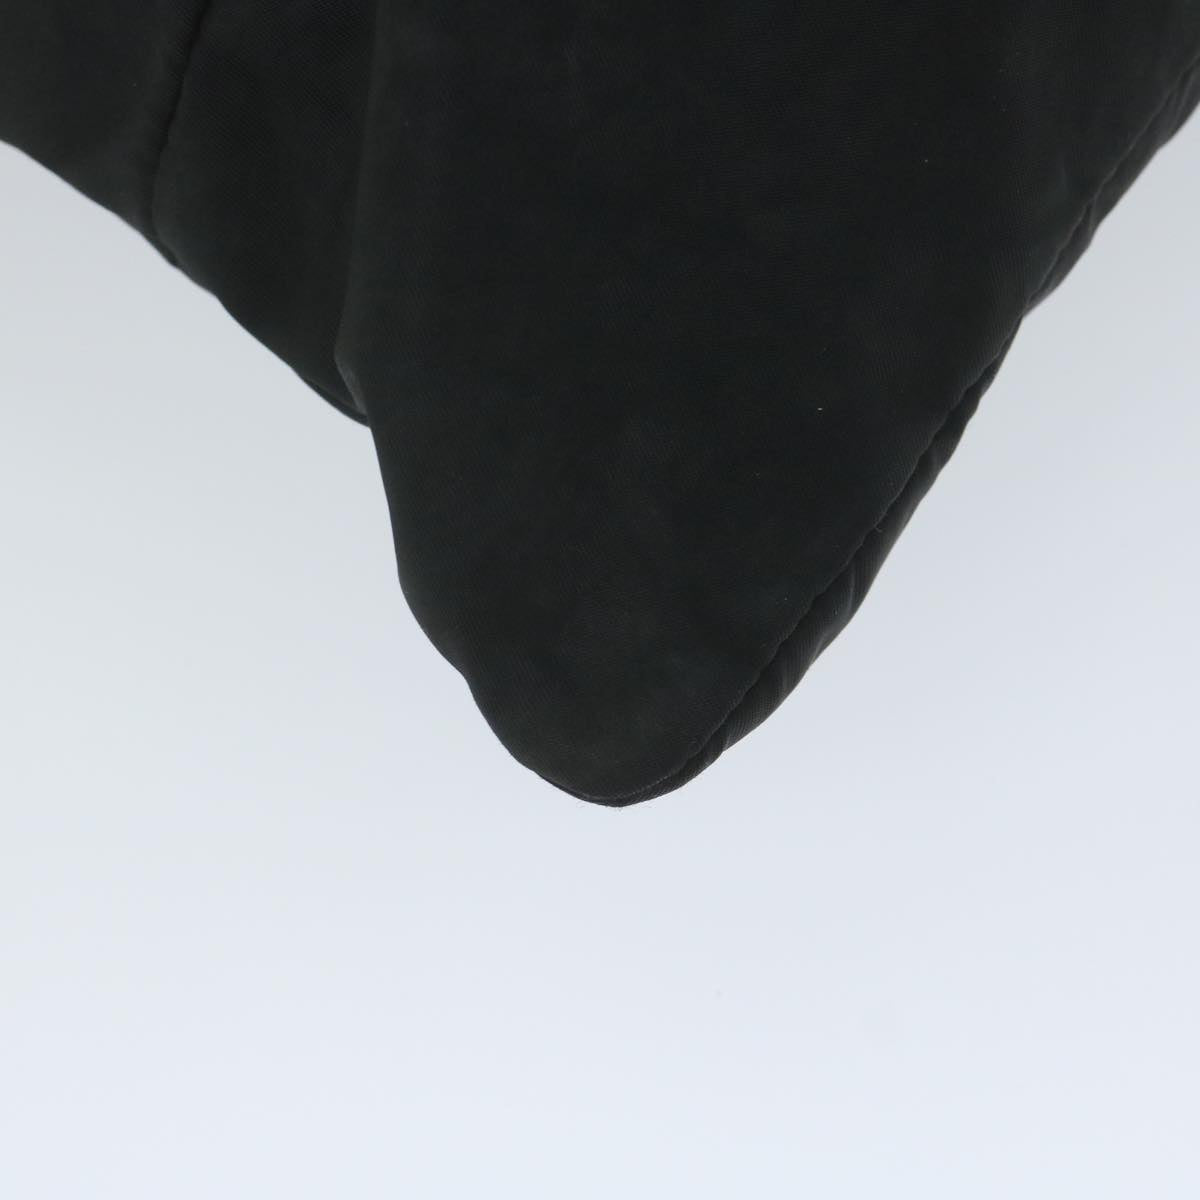 PRADA Shoulder Bag Nylon Black Auth 61406